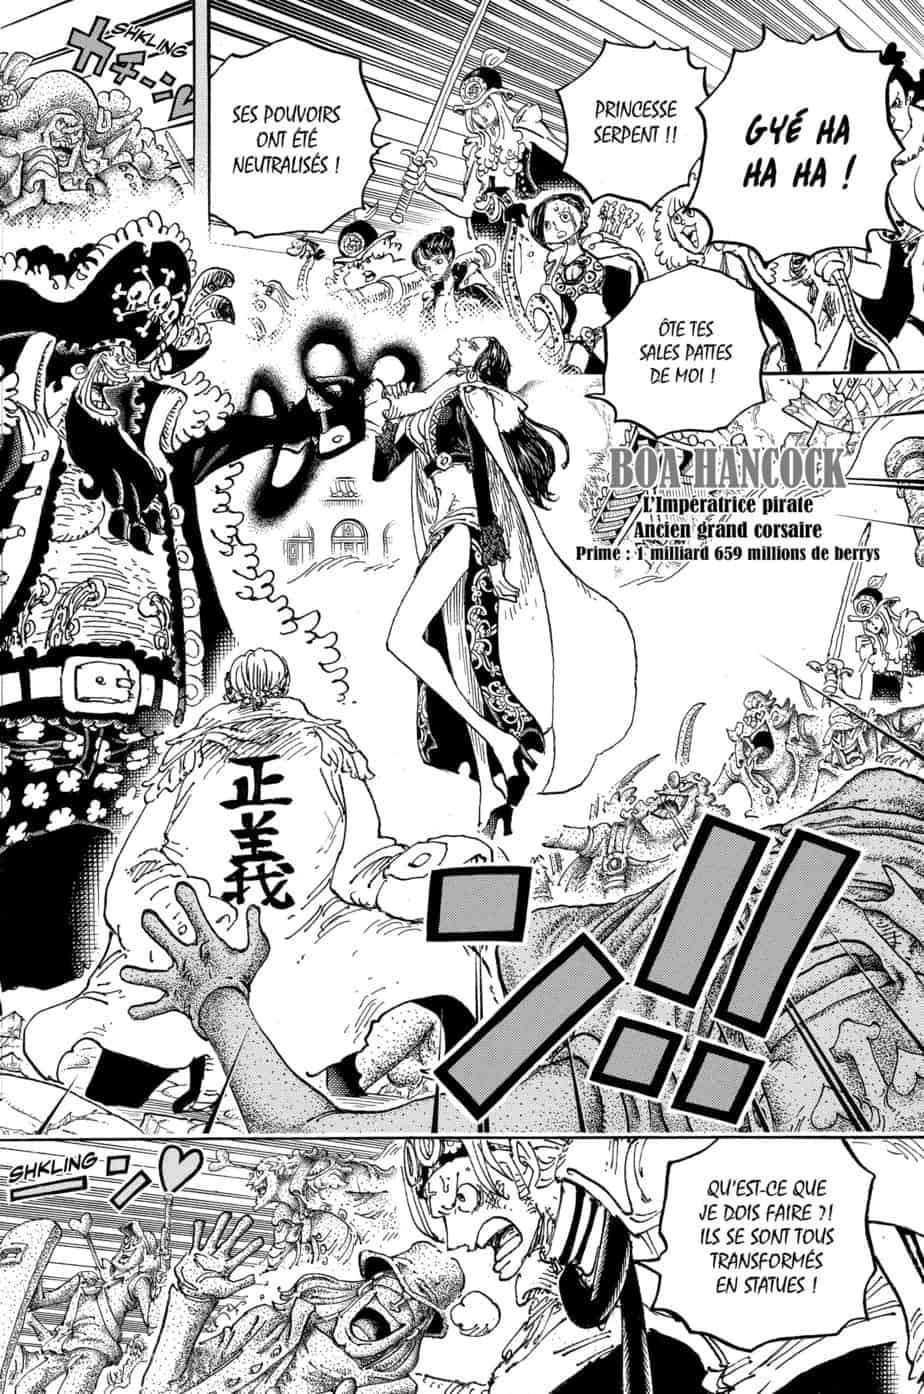 Les Spoiler One Piece Chapitre 1061 : L'état de Boa Hancock rend les lecteurs inquiets 3 12